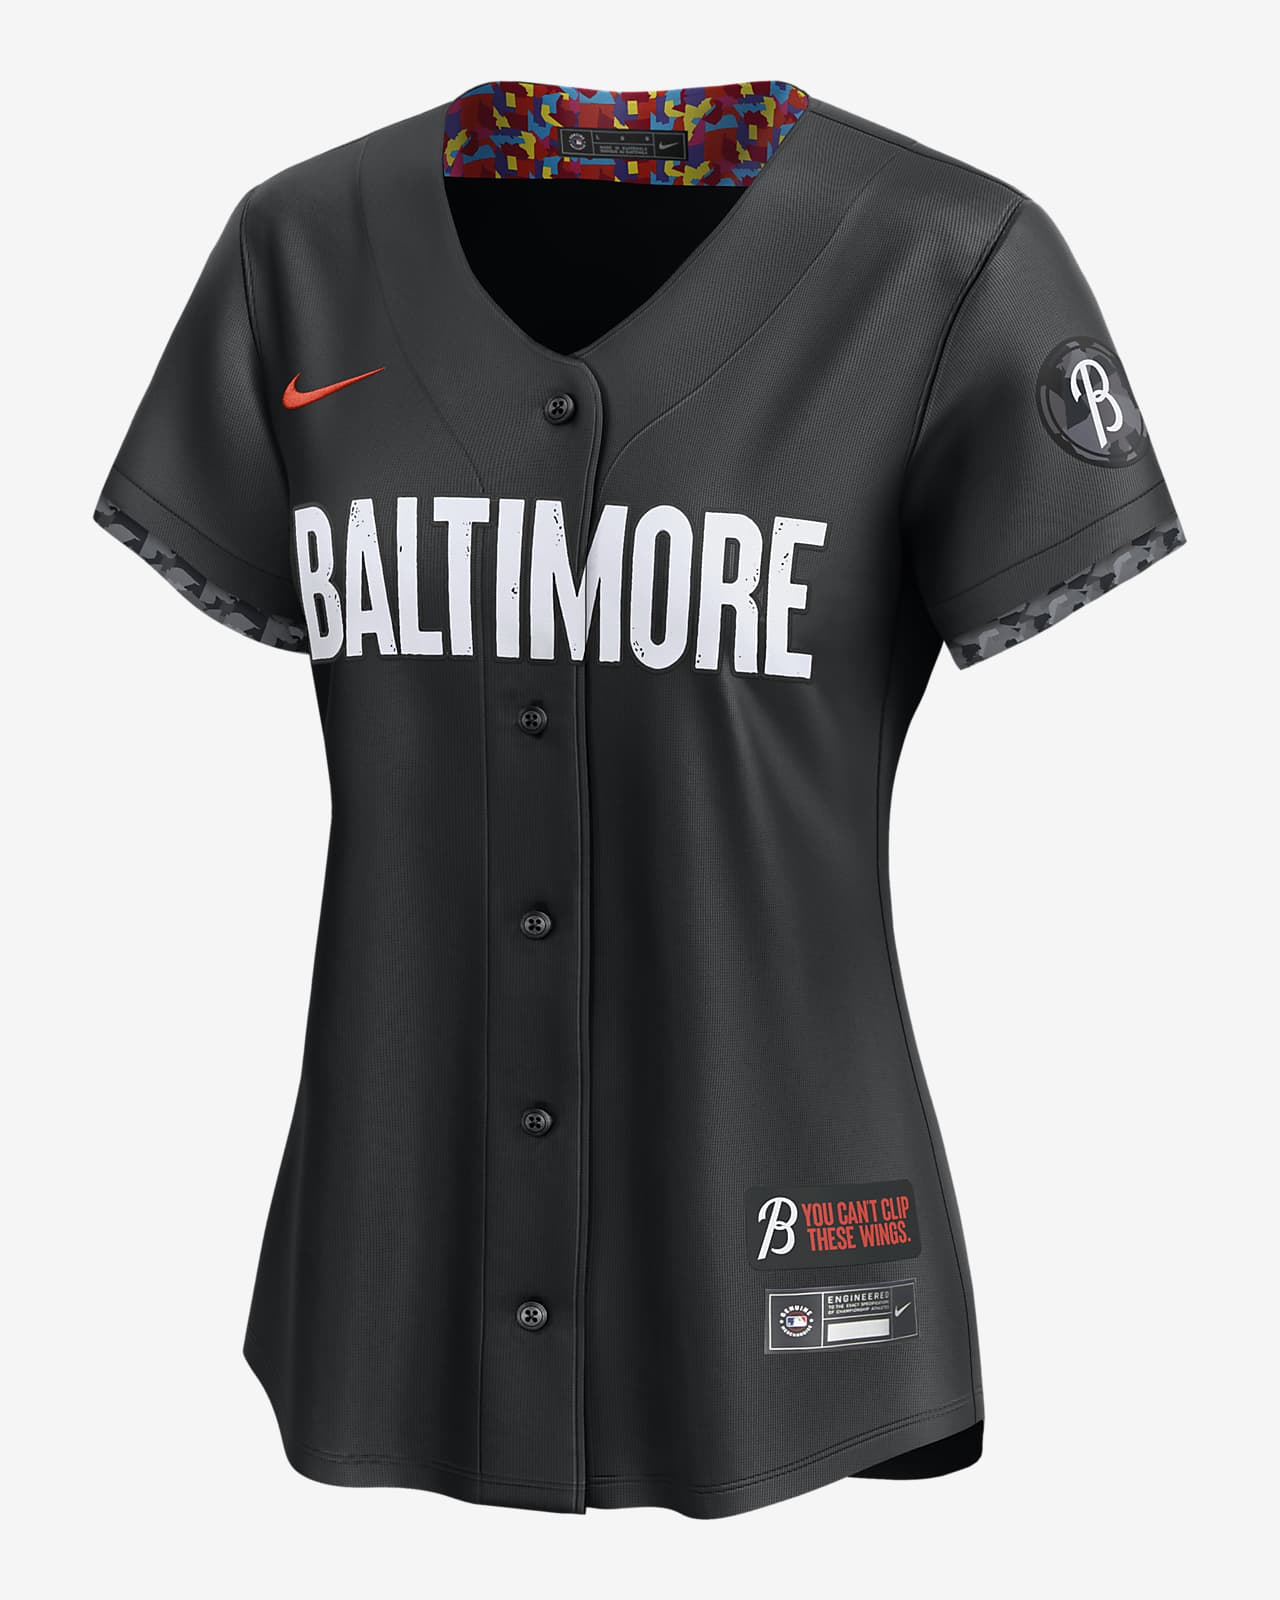 Adley Rutschman Baltimore Orioles City Connect Women's Nike Dri-FIT ADV MLB Limited Jersey